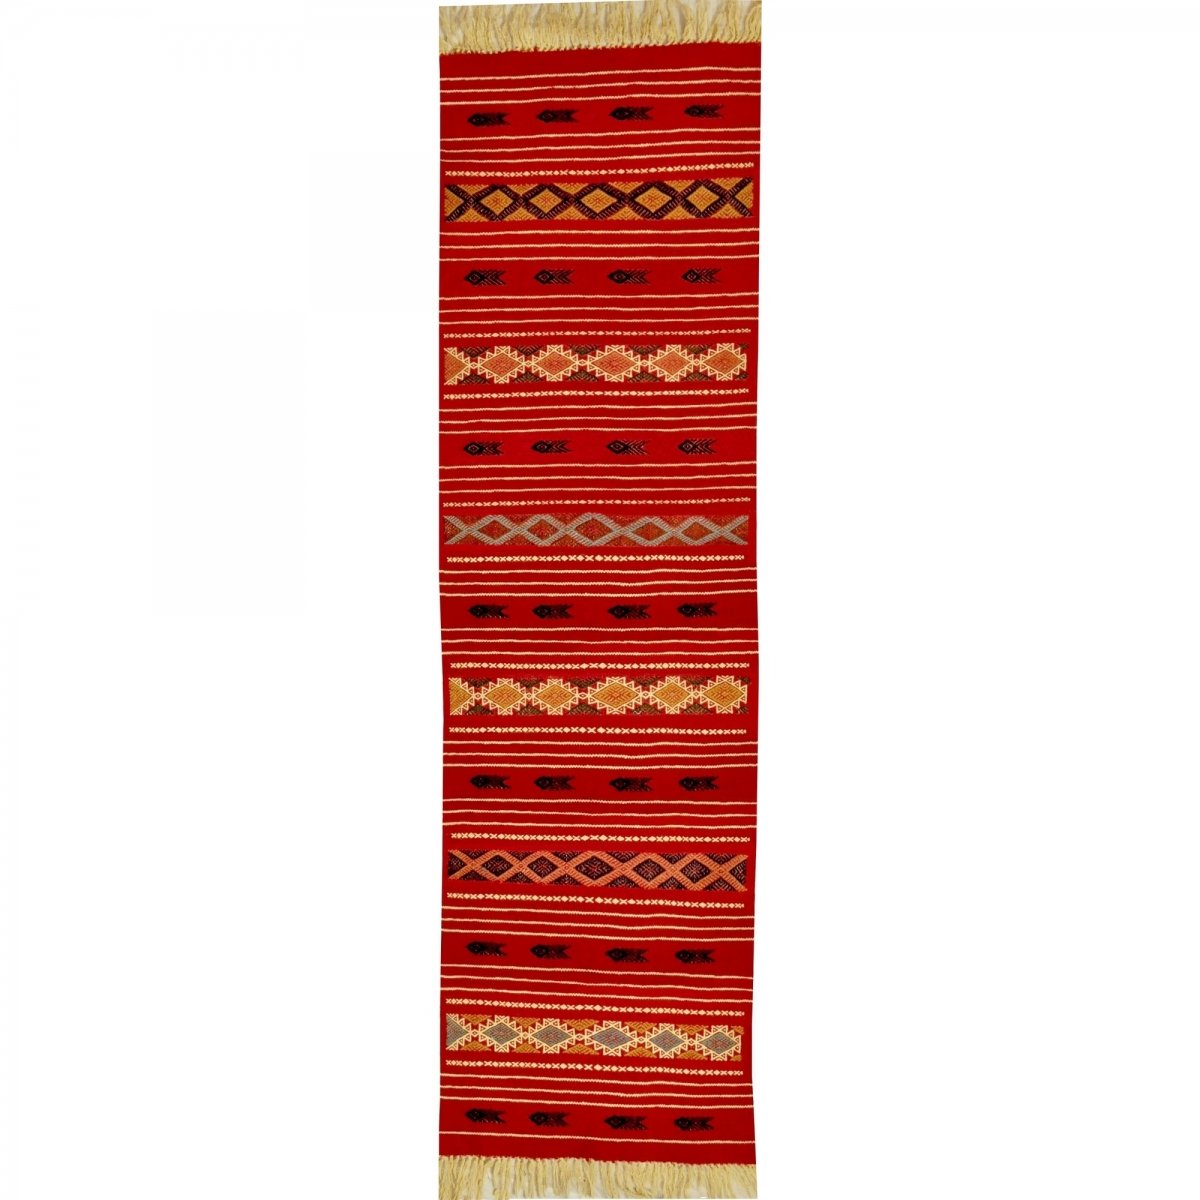 Berber carpet Rug Kilim long Mellassine 60x200 Red (Handmade, Wool, Tunisia) Tunisian Rug Kilim style Moroccan rug. Rectangular 